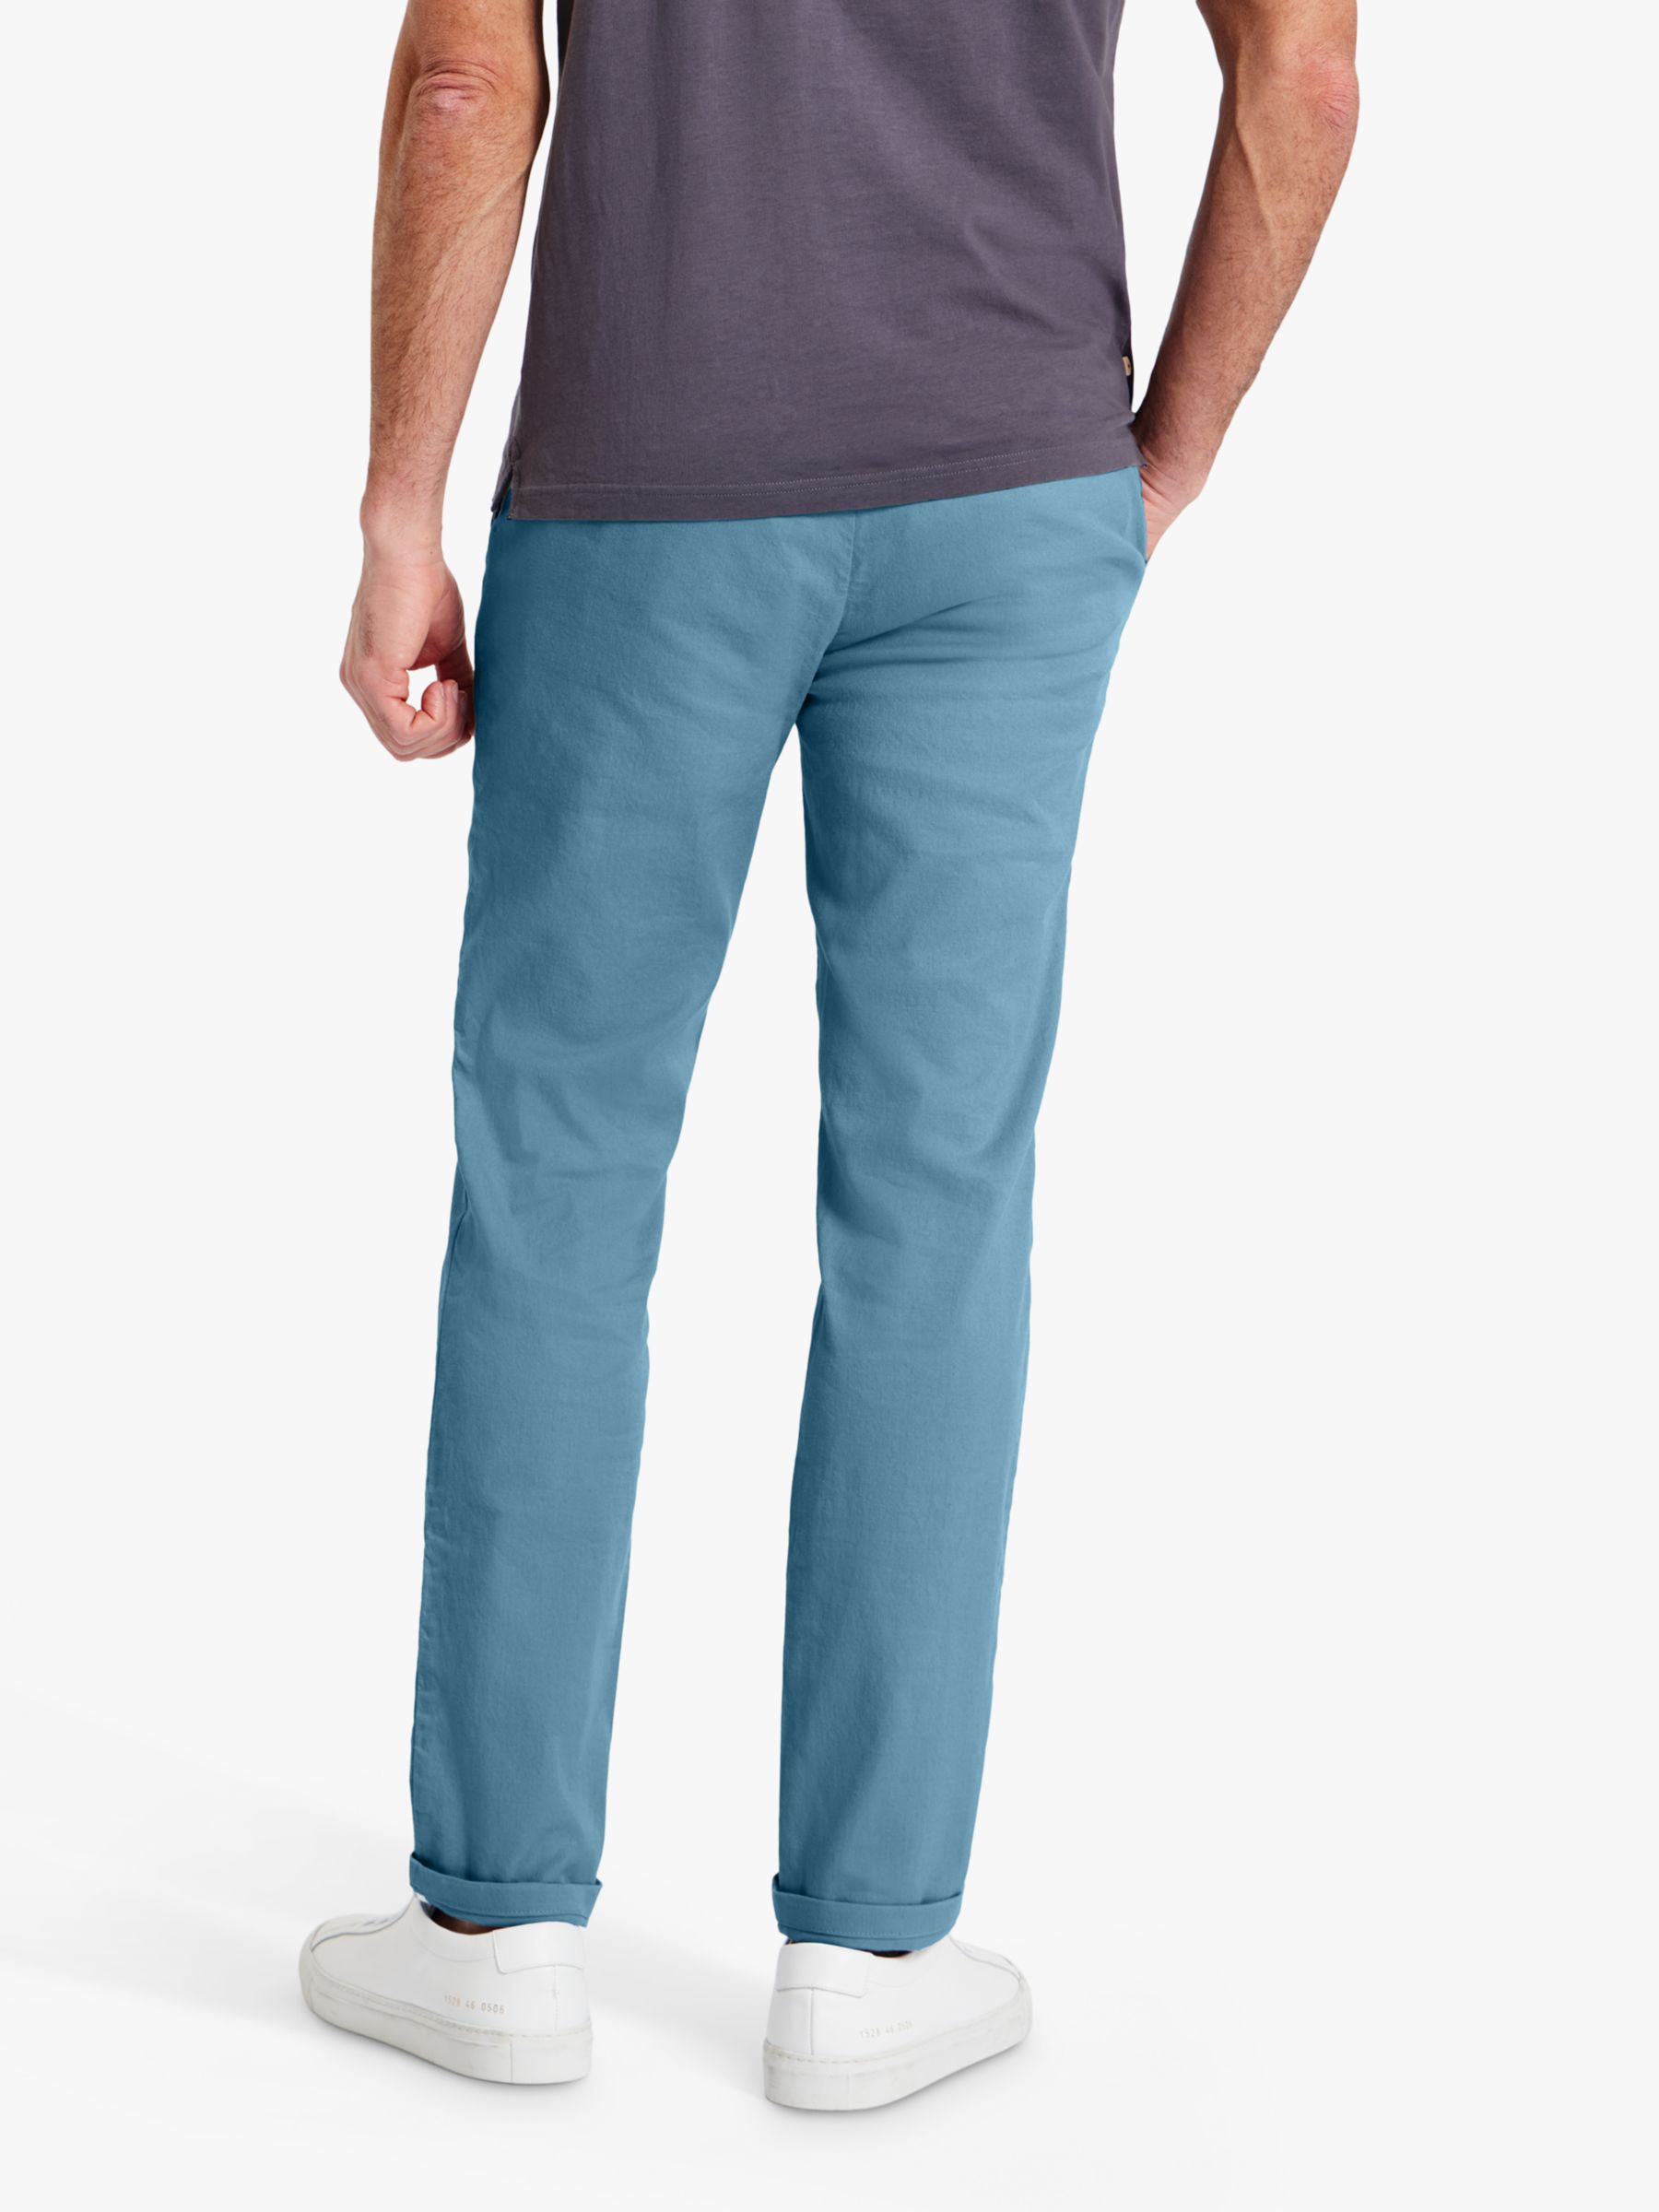 Buy SPOKE Linen Sharps Slim Thigh Trousers Online at johnlewis.com